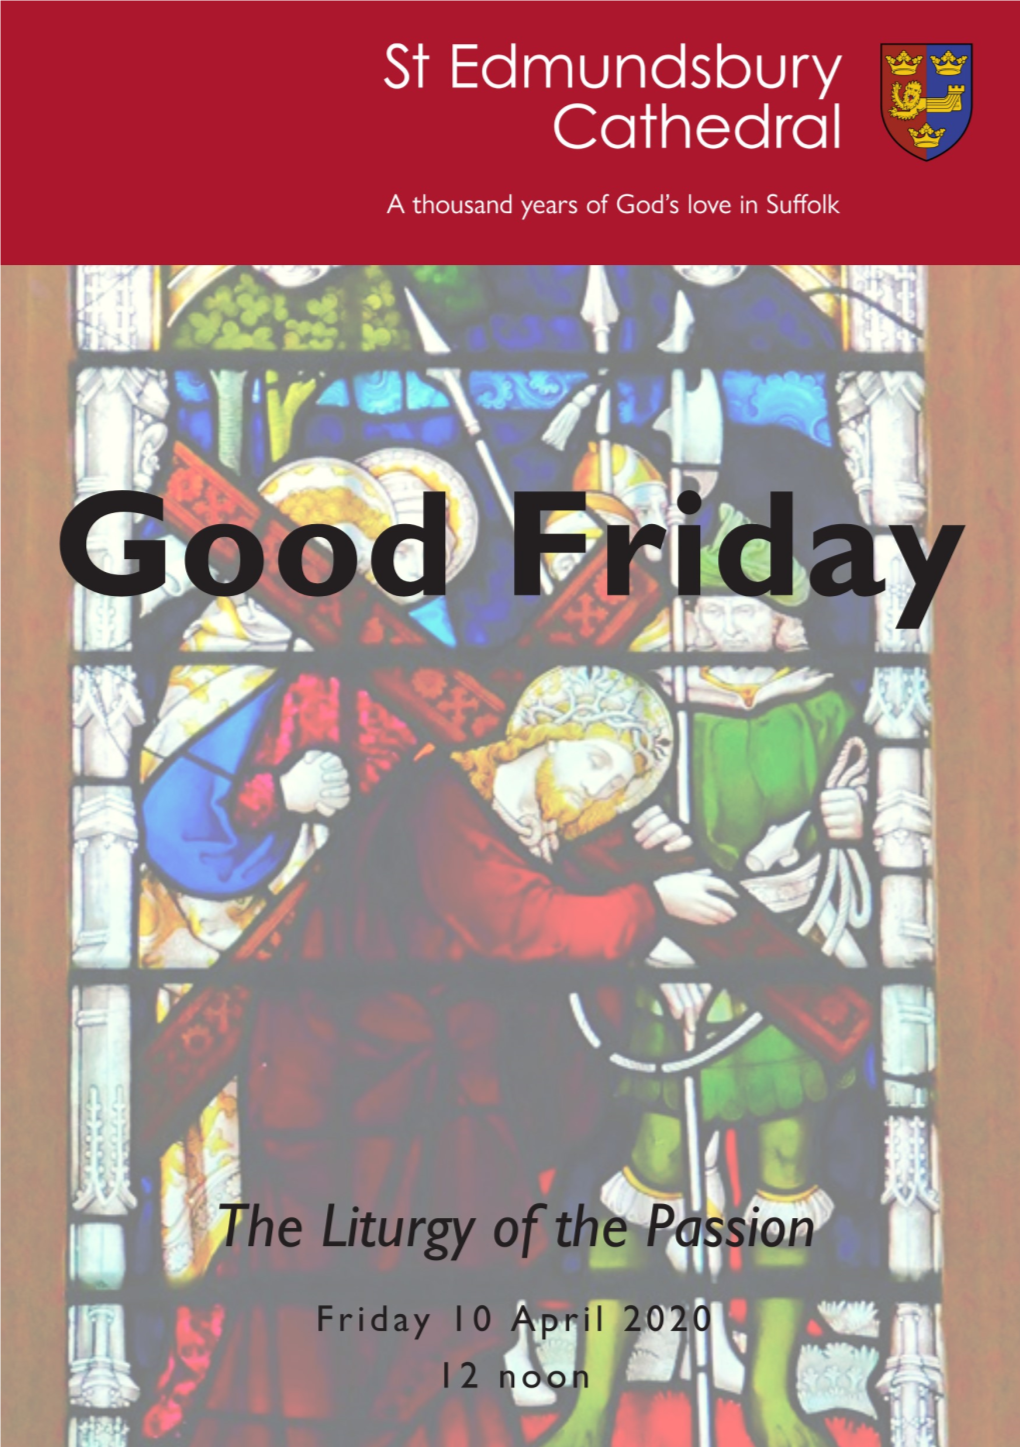 The Good Friday Liturgy